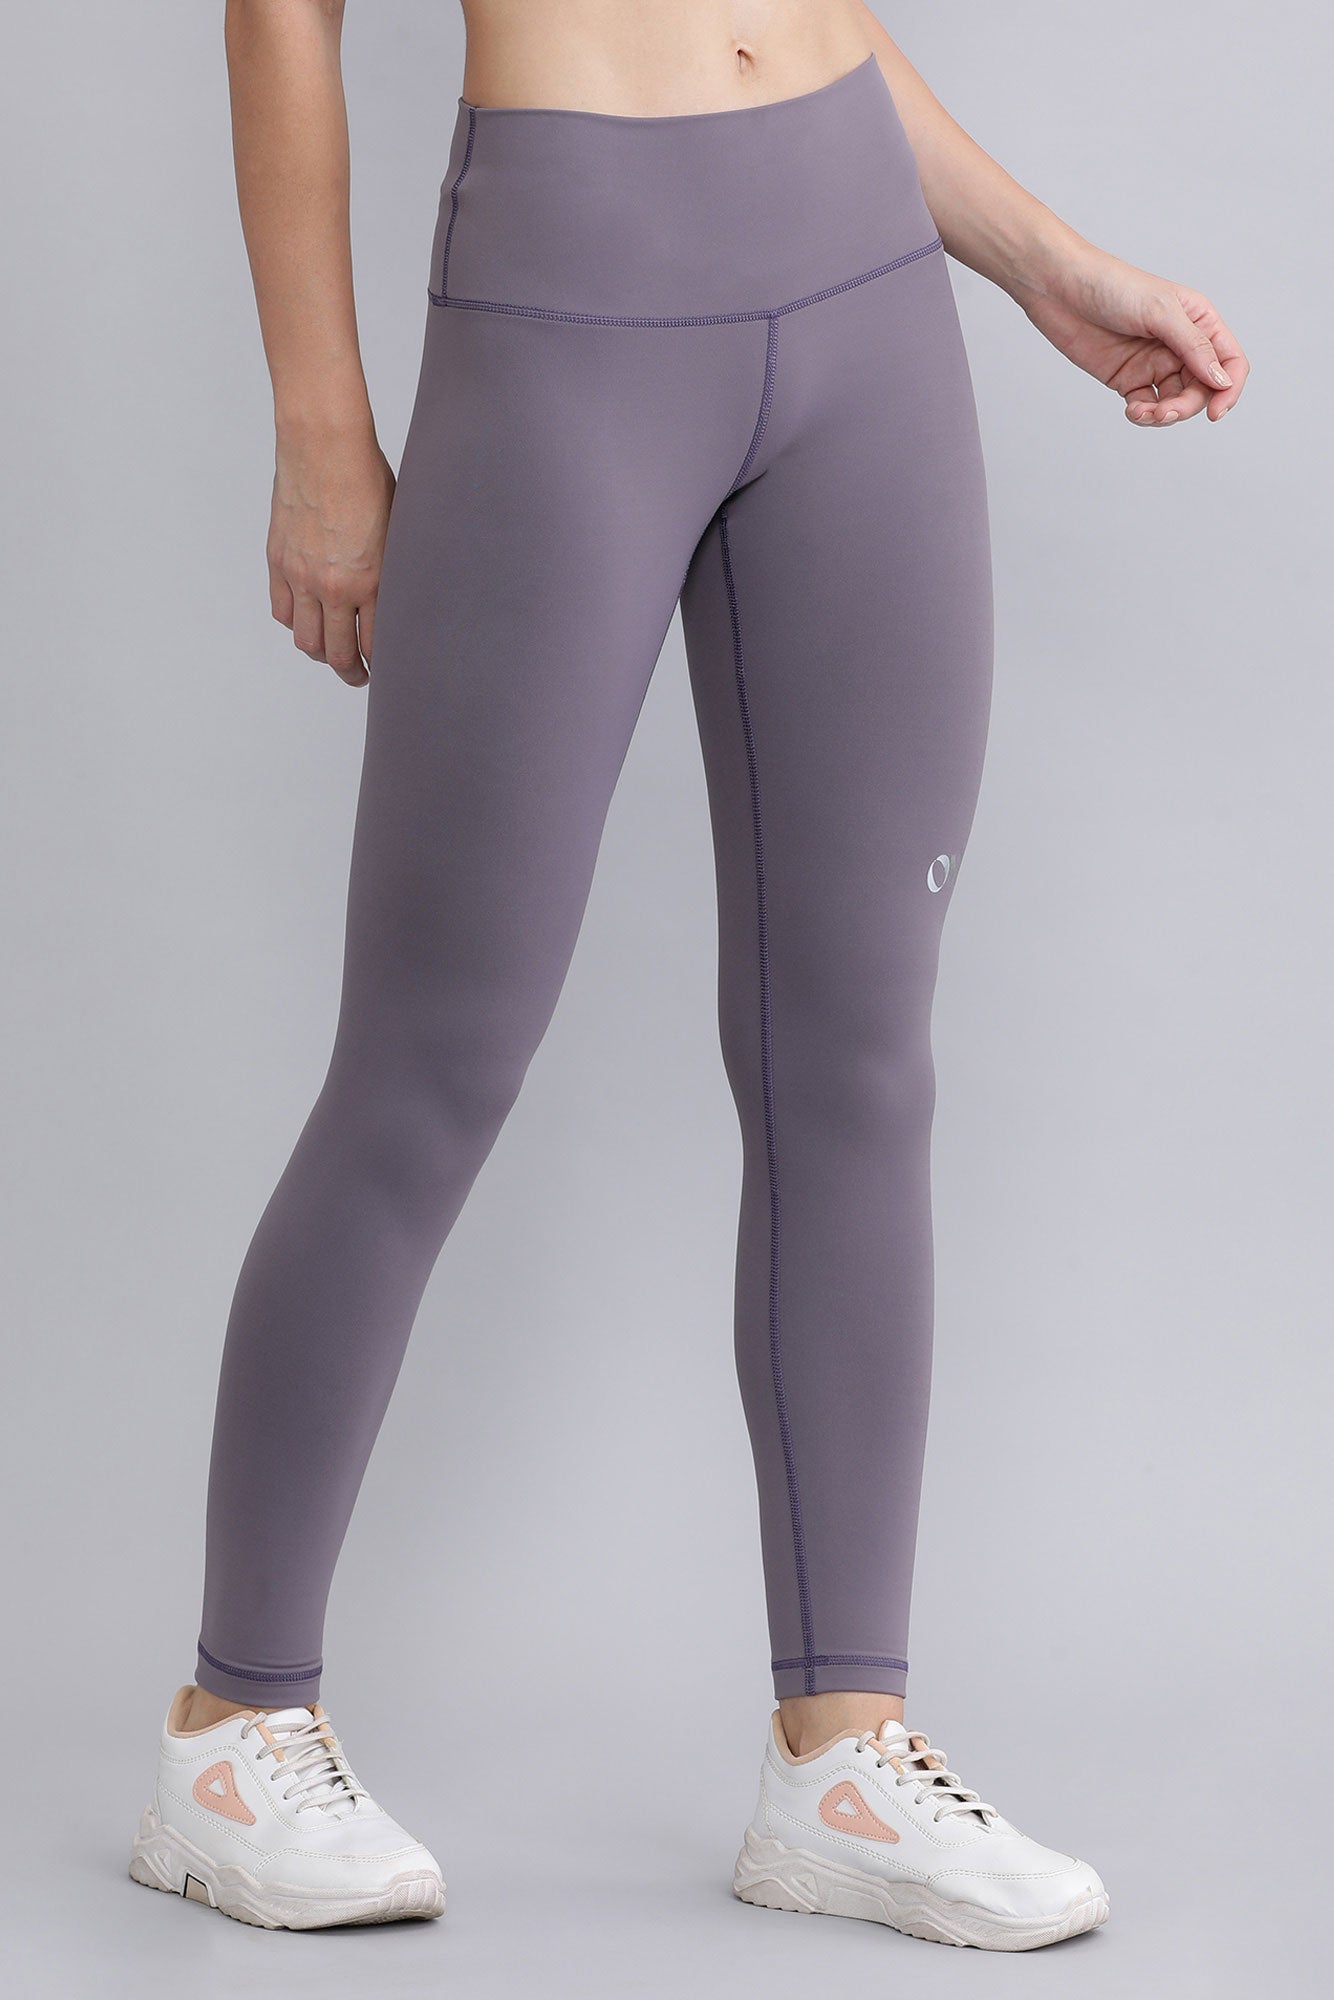 Purple Grey leggings